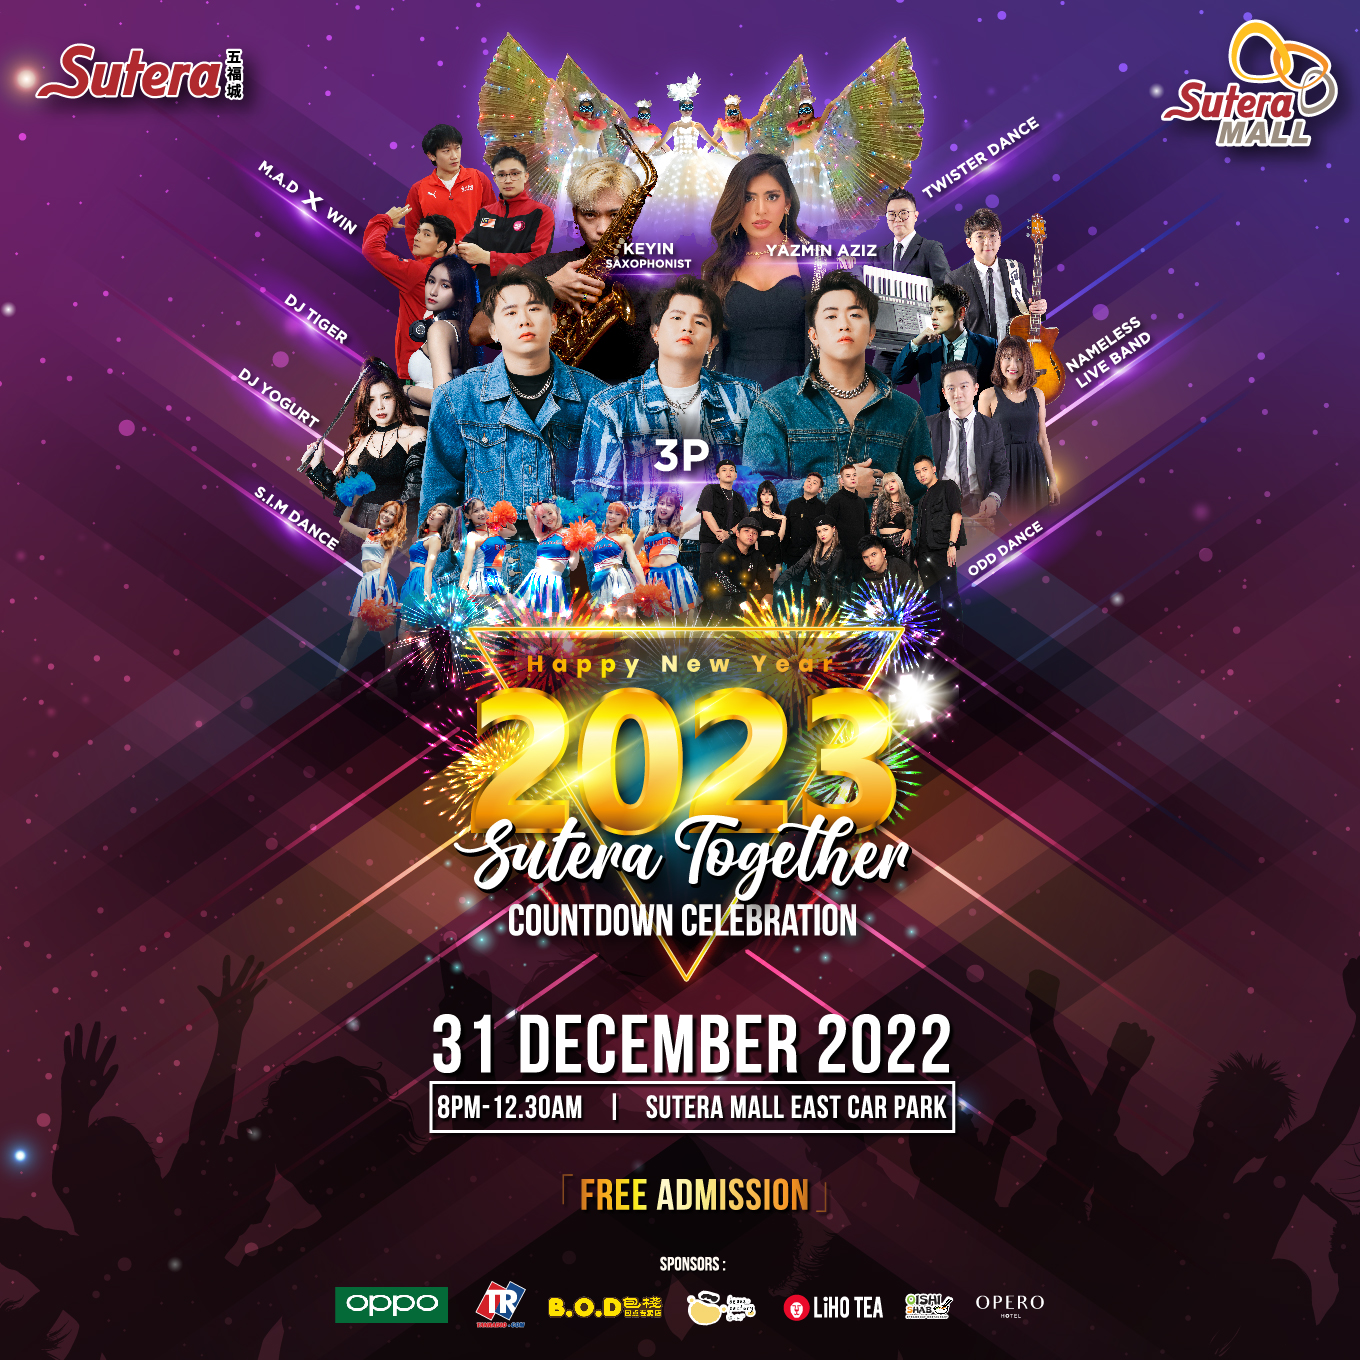 Sutera Together 2023 Countdown Celebration